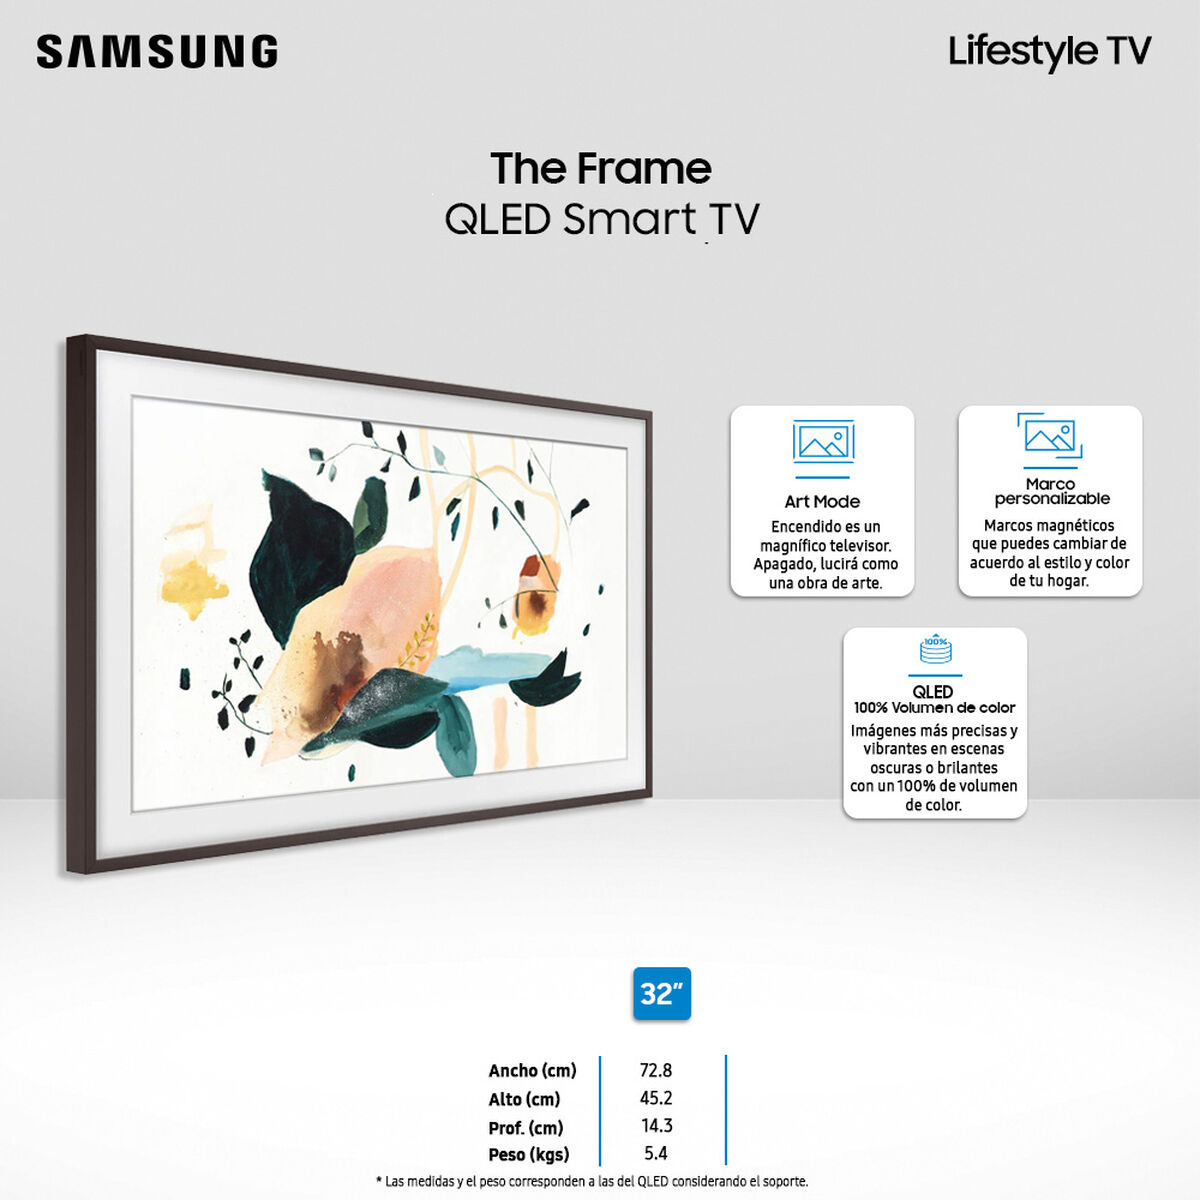 QLED 32" Samsung The Frame Smart TV FHD